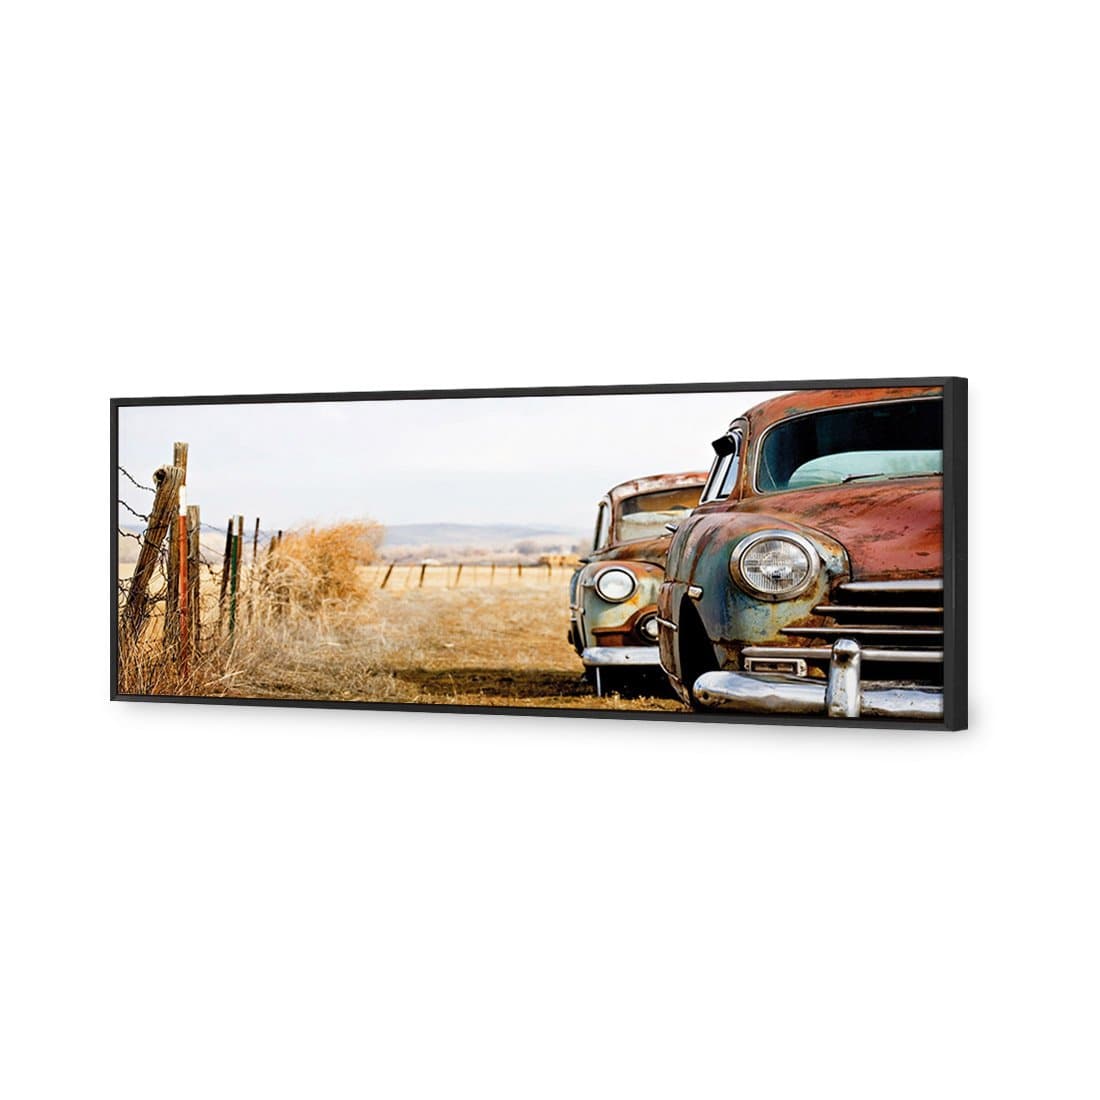 Rusty Cars Canvas Art-Canvas-Wall Art Designs-60x20cm-Canvas - Black Frame-Wall Art Designs